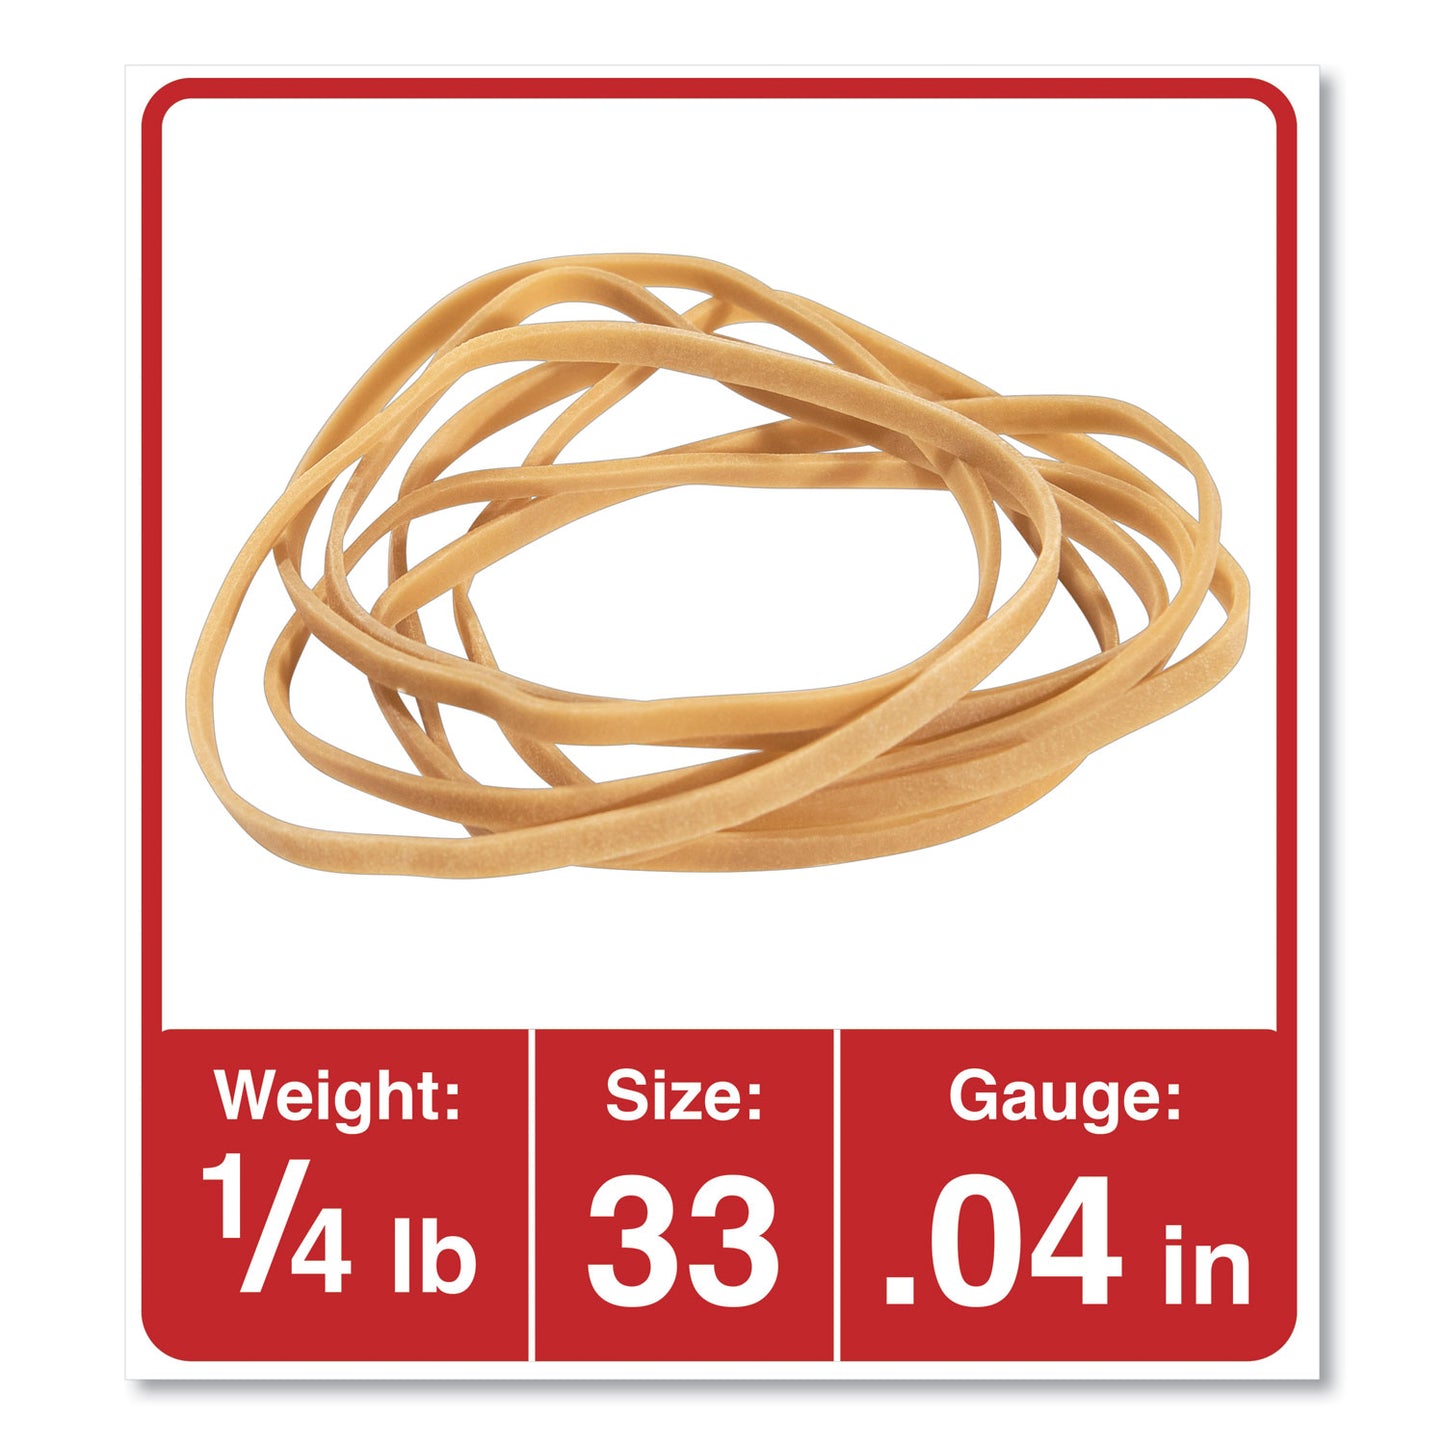 Rubber Bands, Size 33, 0.04" Gauge, Beige, 4 oz Box, 160/Pack Great elasticity